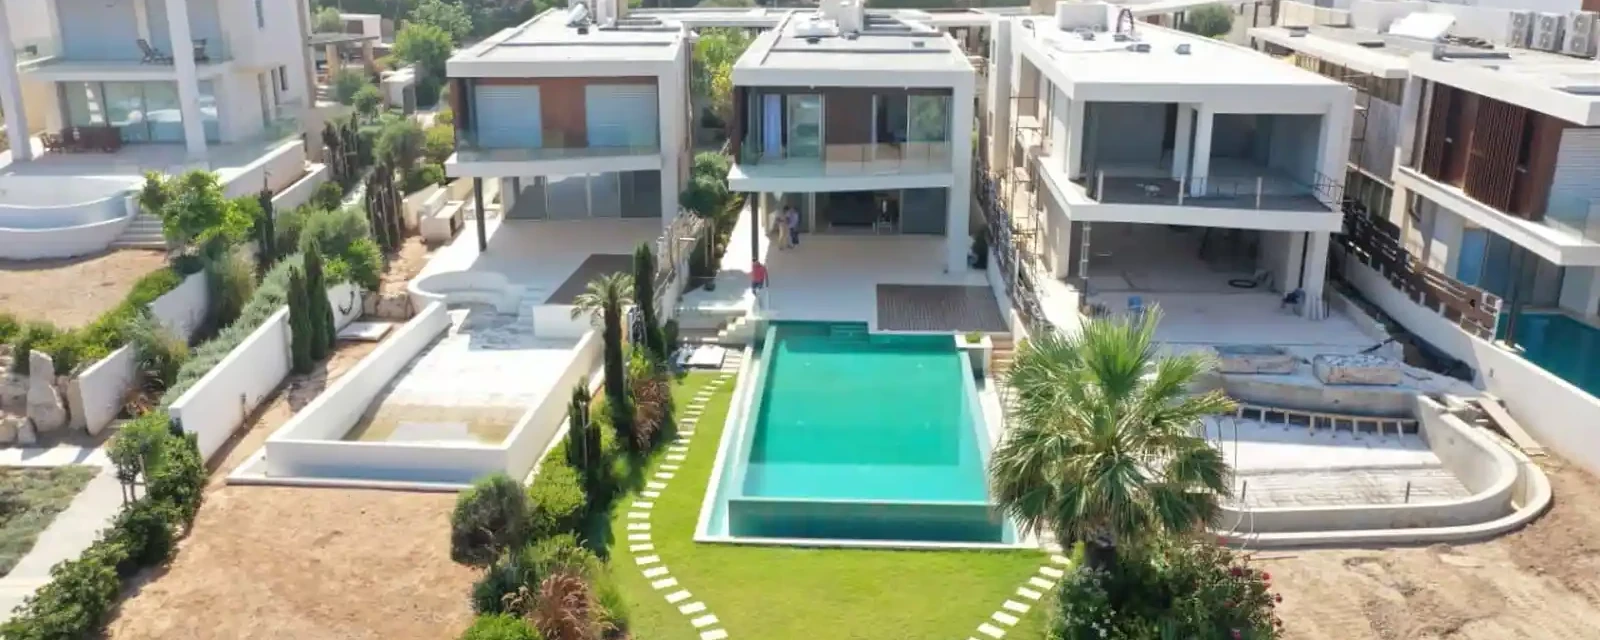 6-bedroom villa fоr sаle €4.250.000, image 1